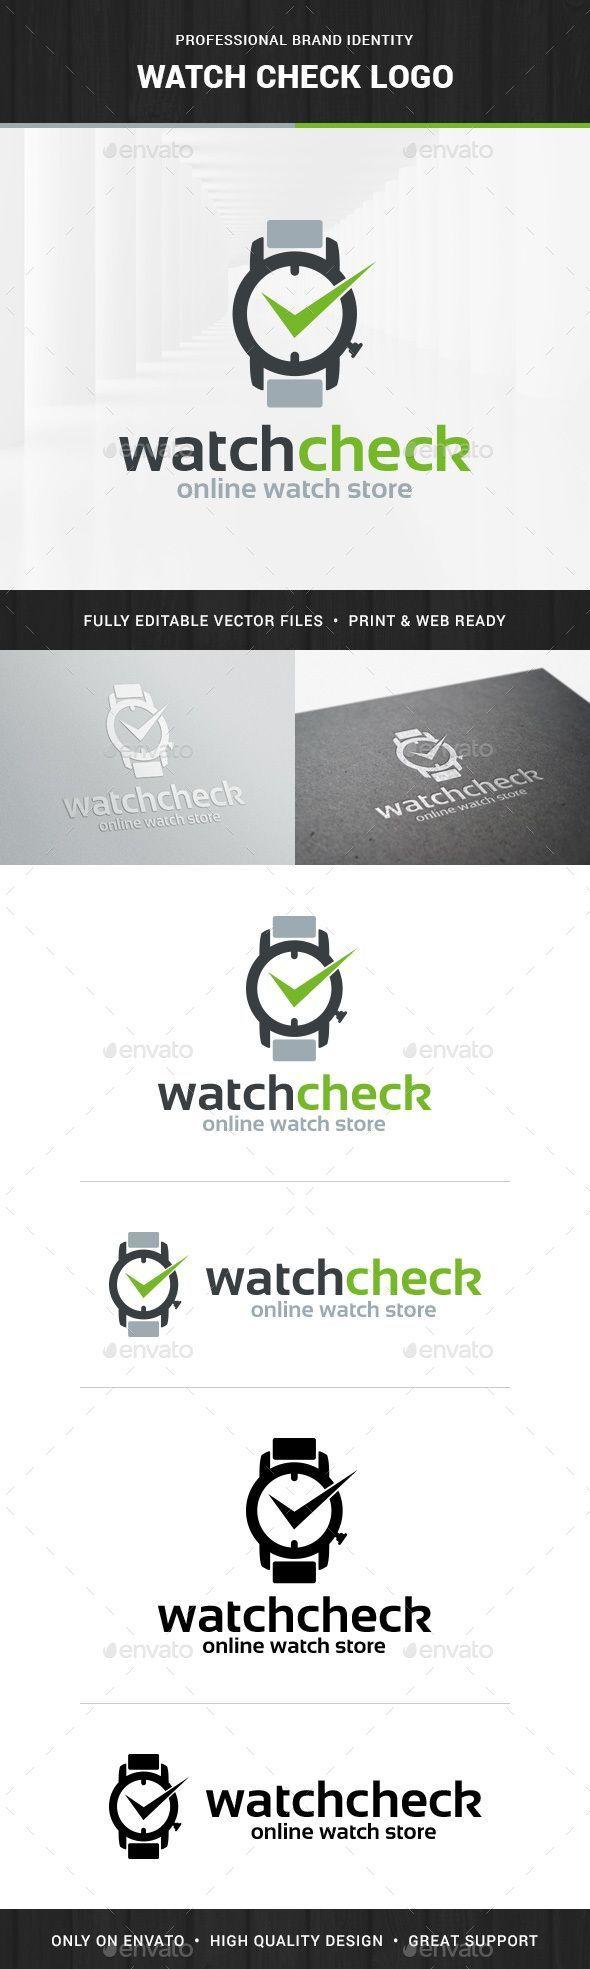 Modern Check Mark Logo - The Watch Check Logo Template A modern watch logo with a check mark